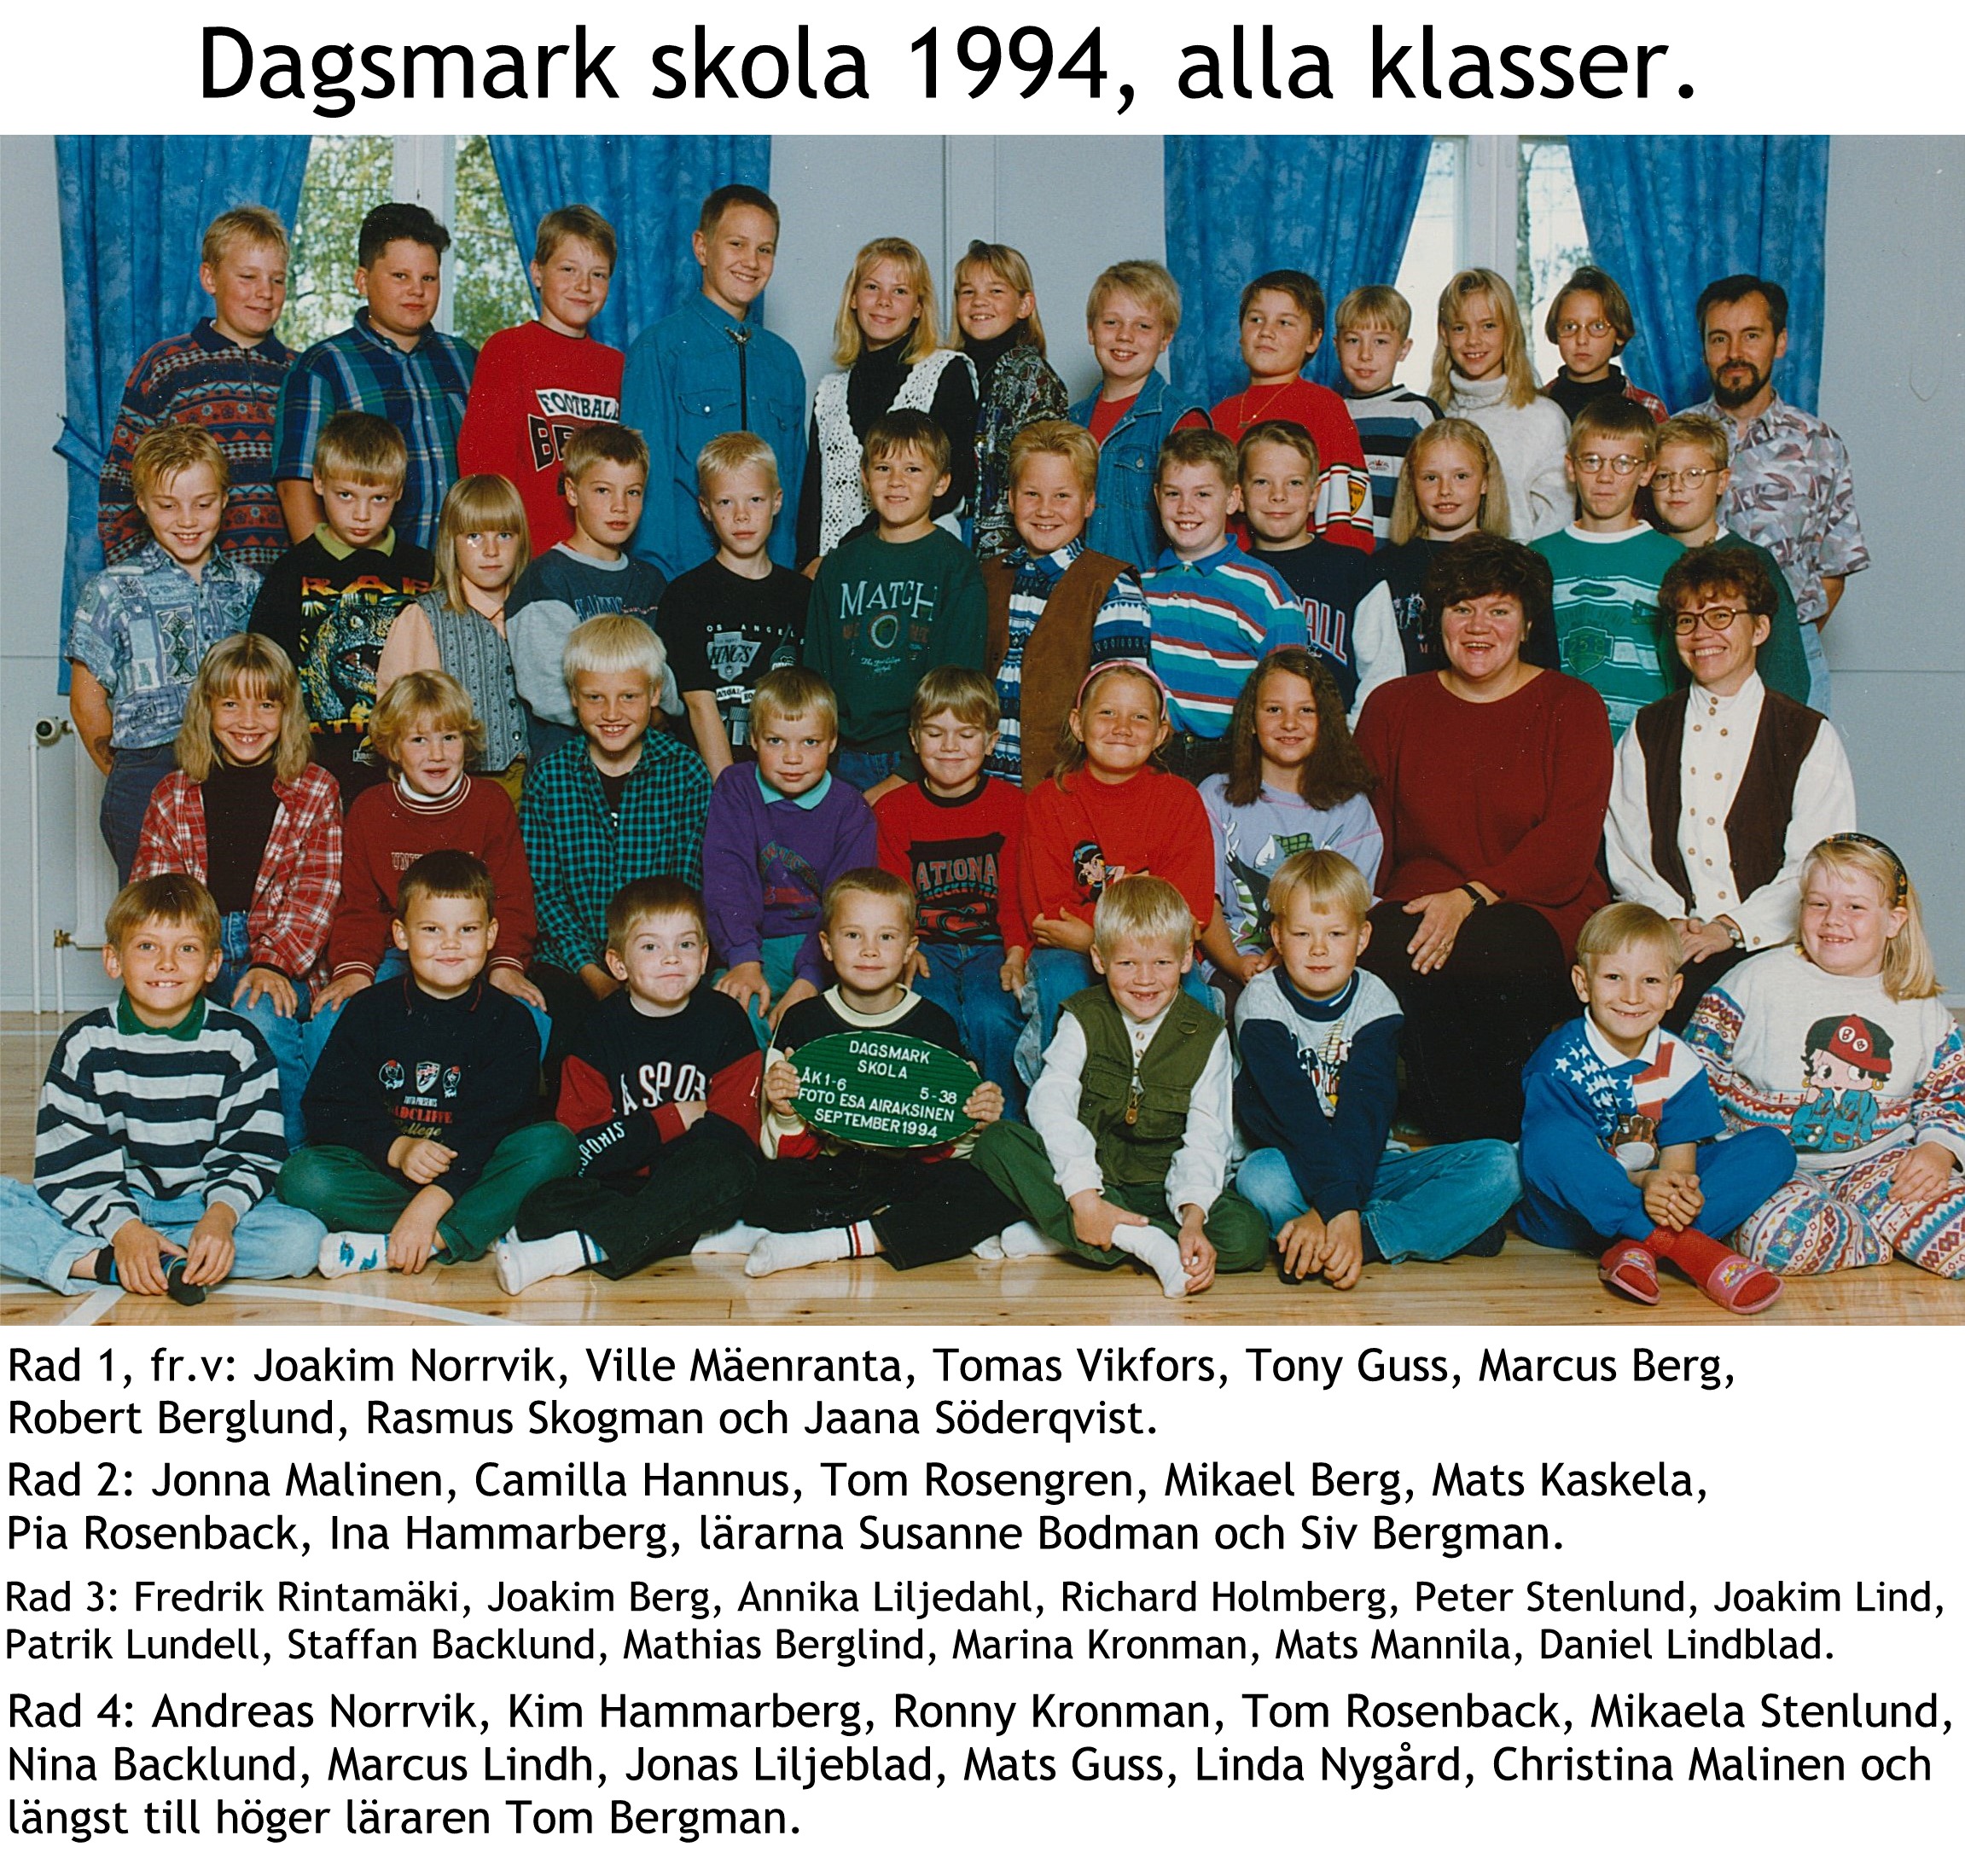 1994 Dagsmark skola alla klasser